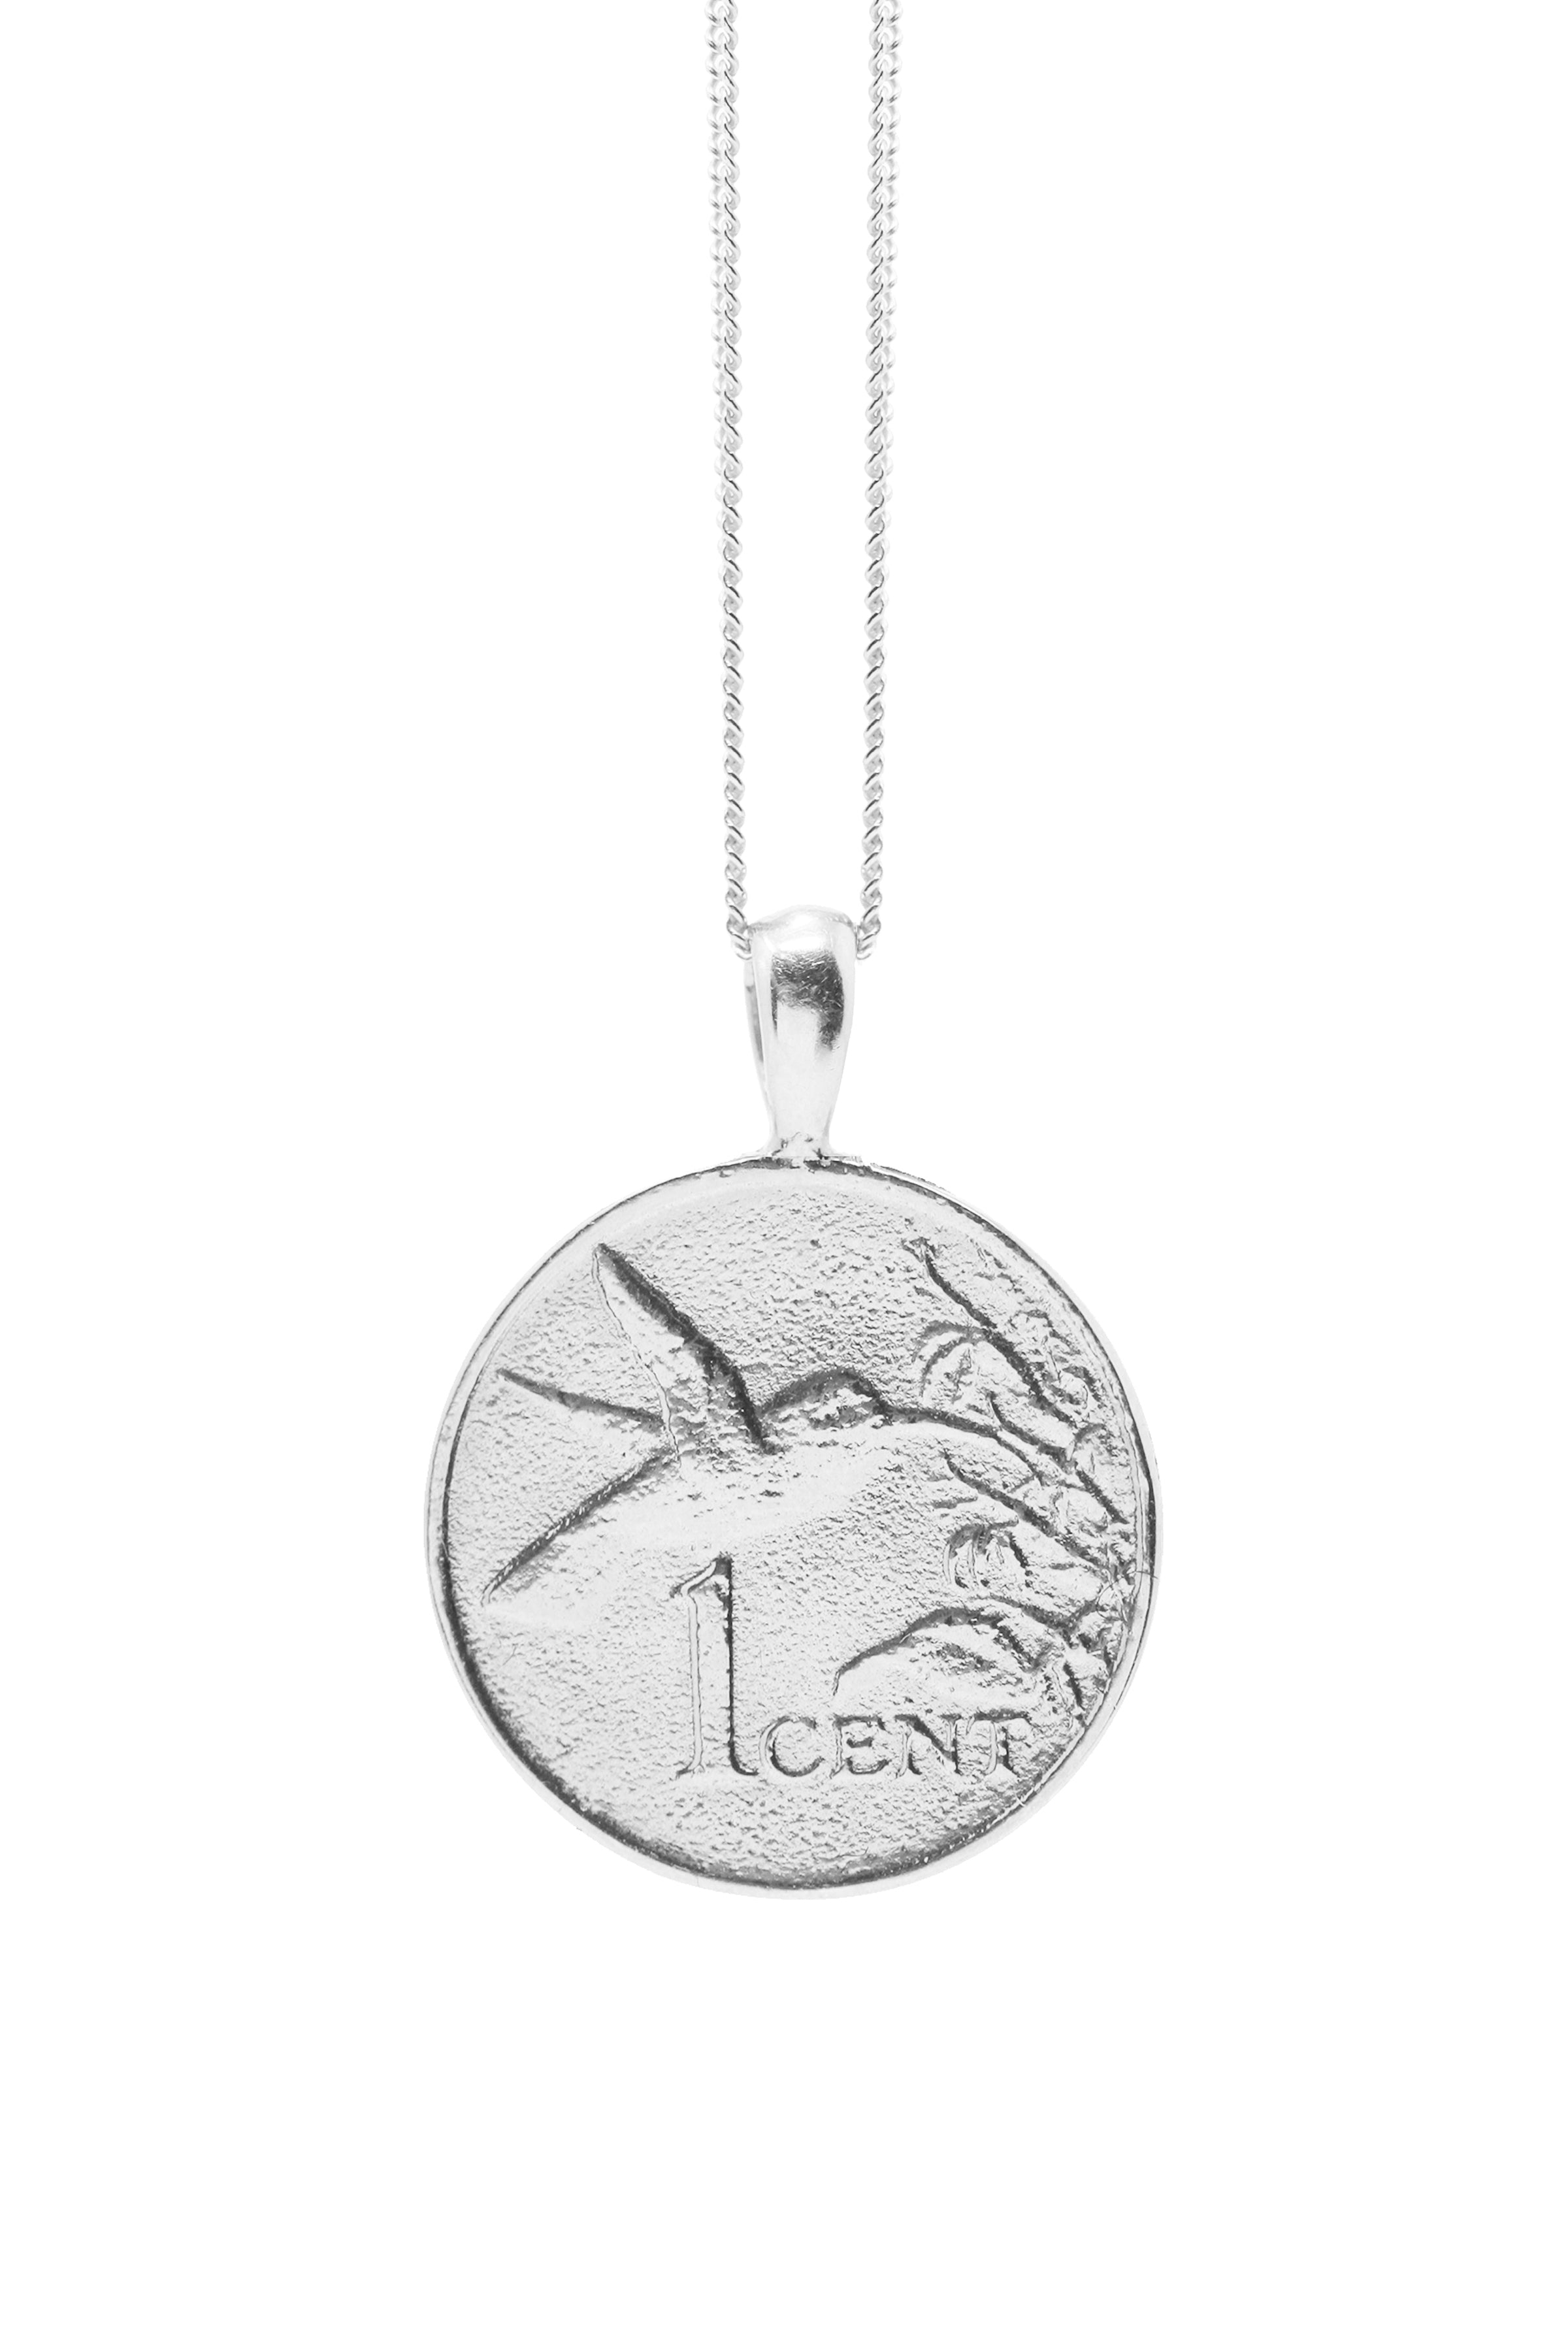 THE TRINIDAD and Tobago Hummingbird Coin Necklace